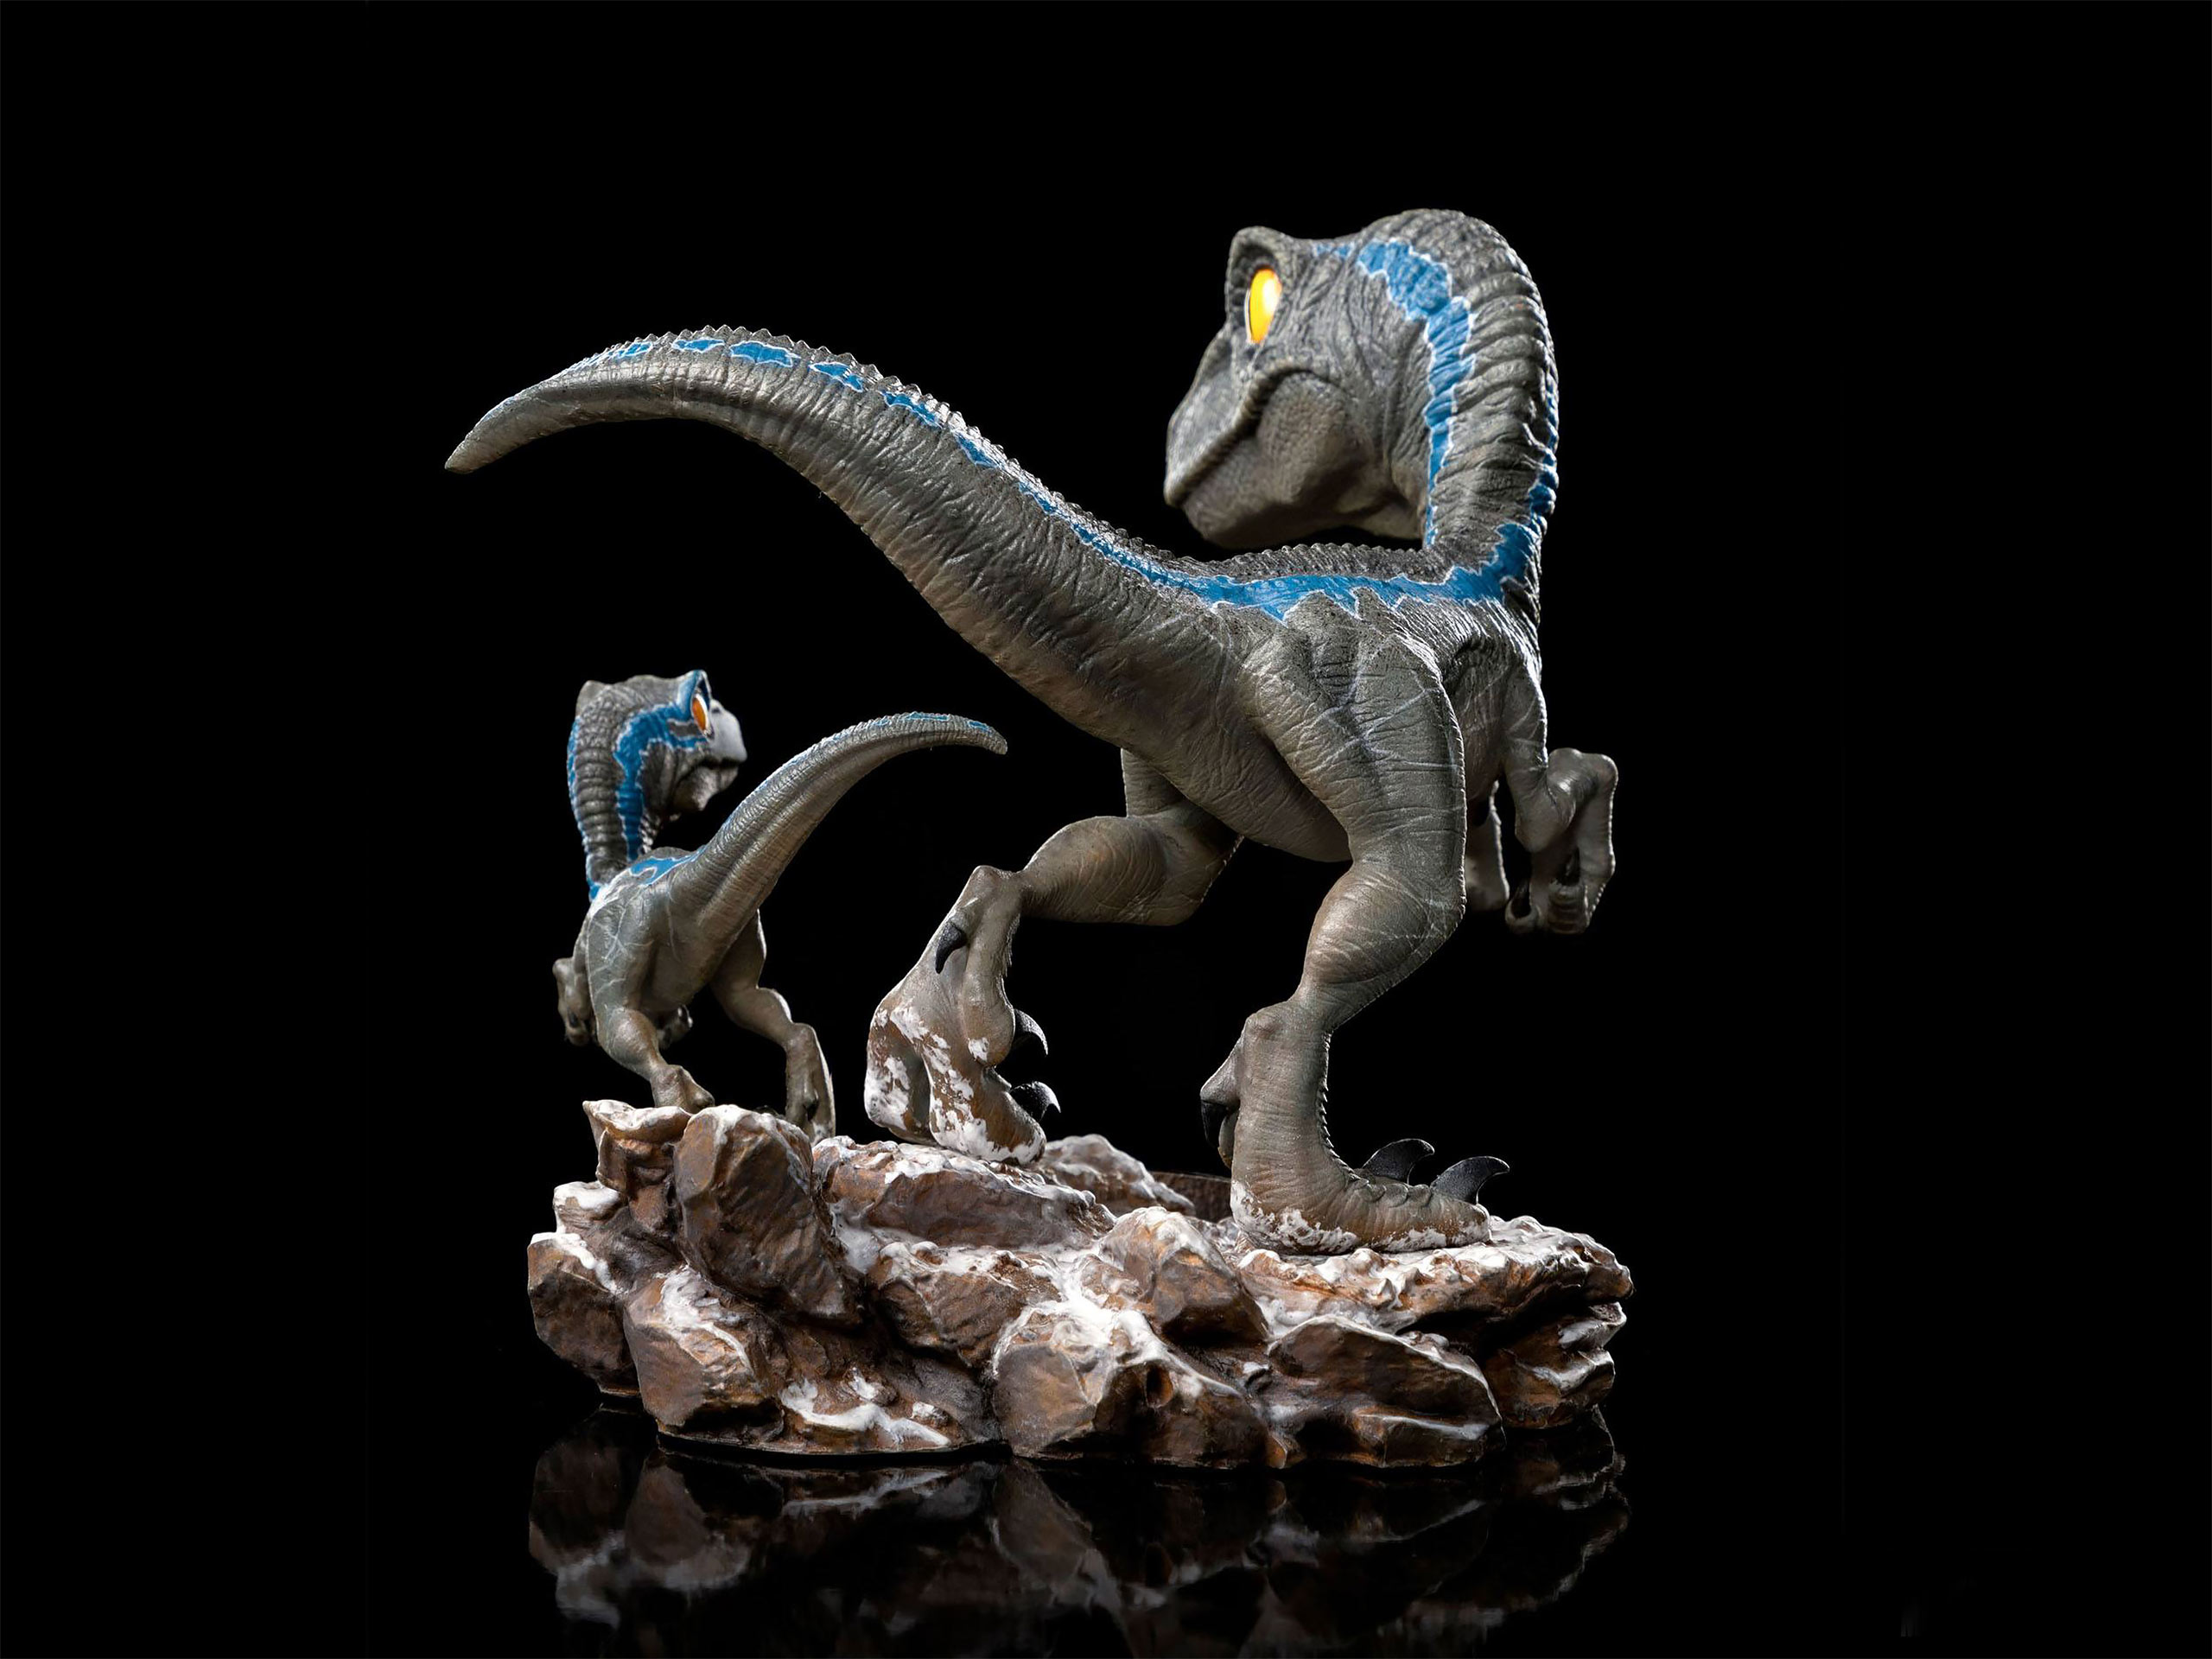 Jurassic World - Blue and Beta Diorama Figure